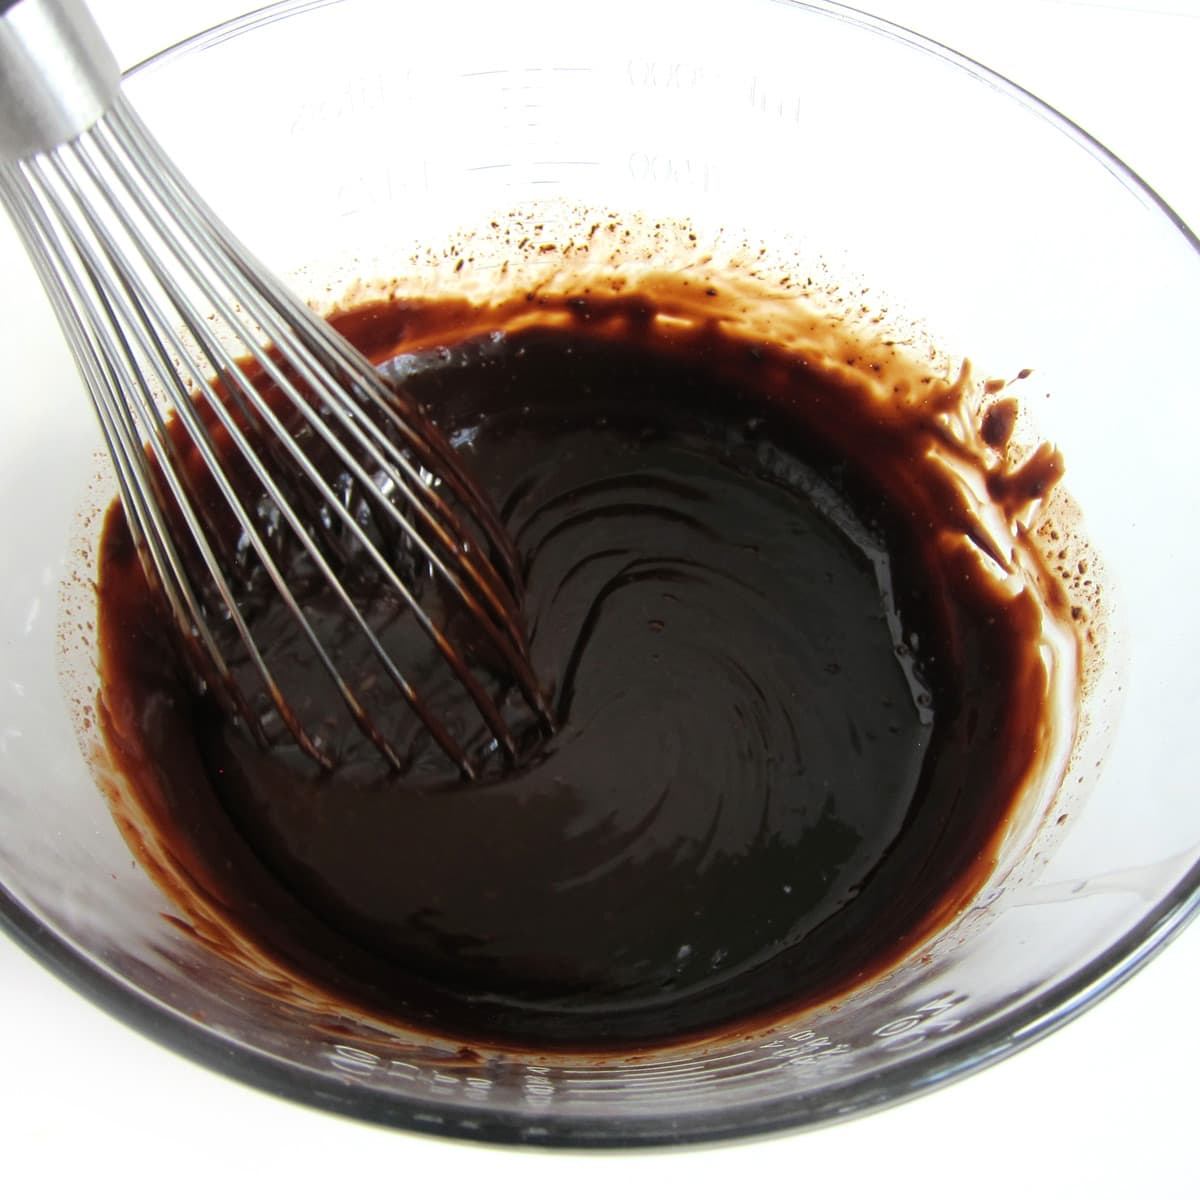 custard mixed into chocolate